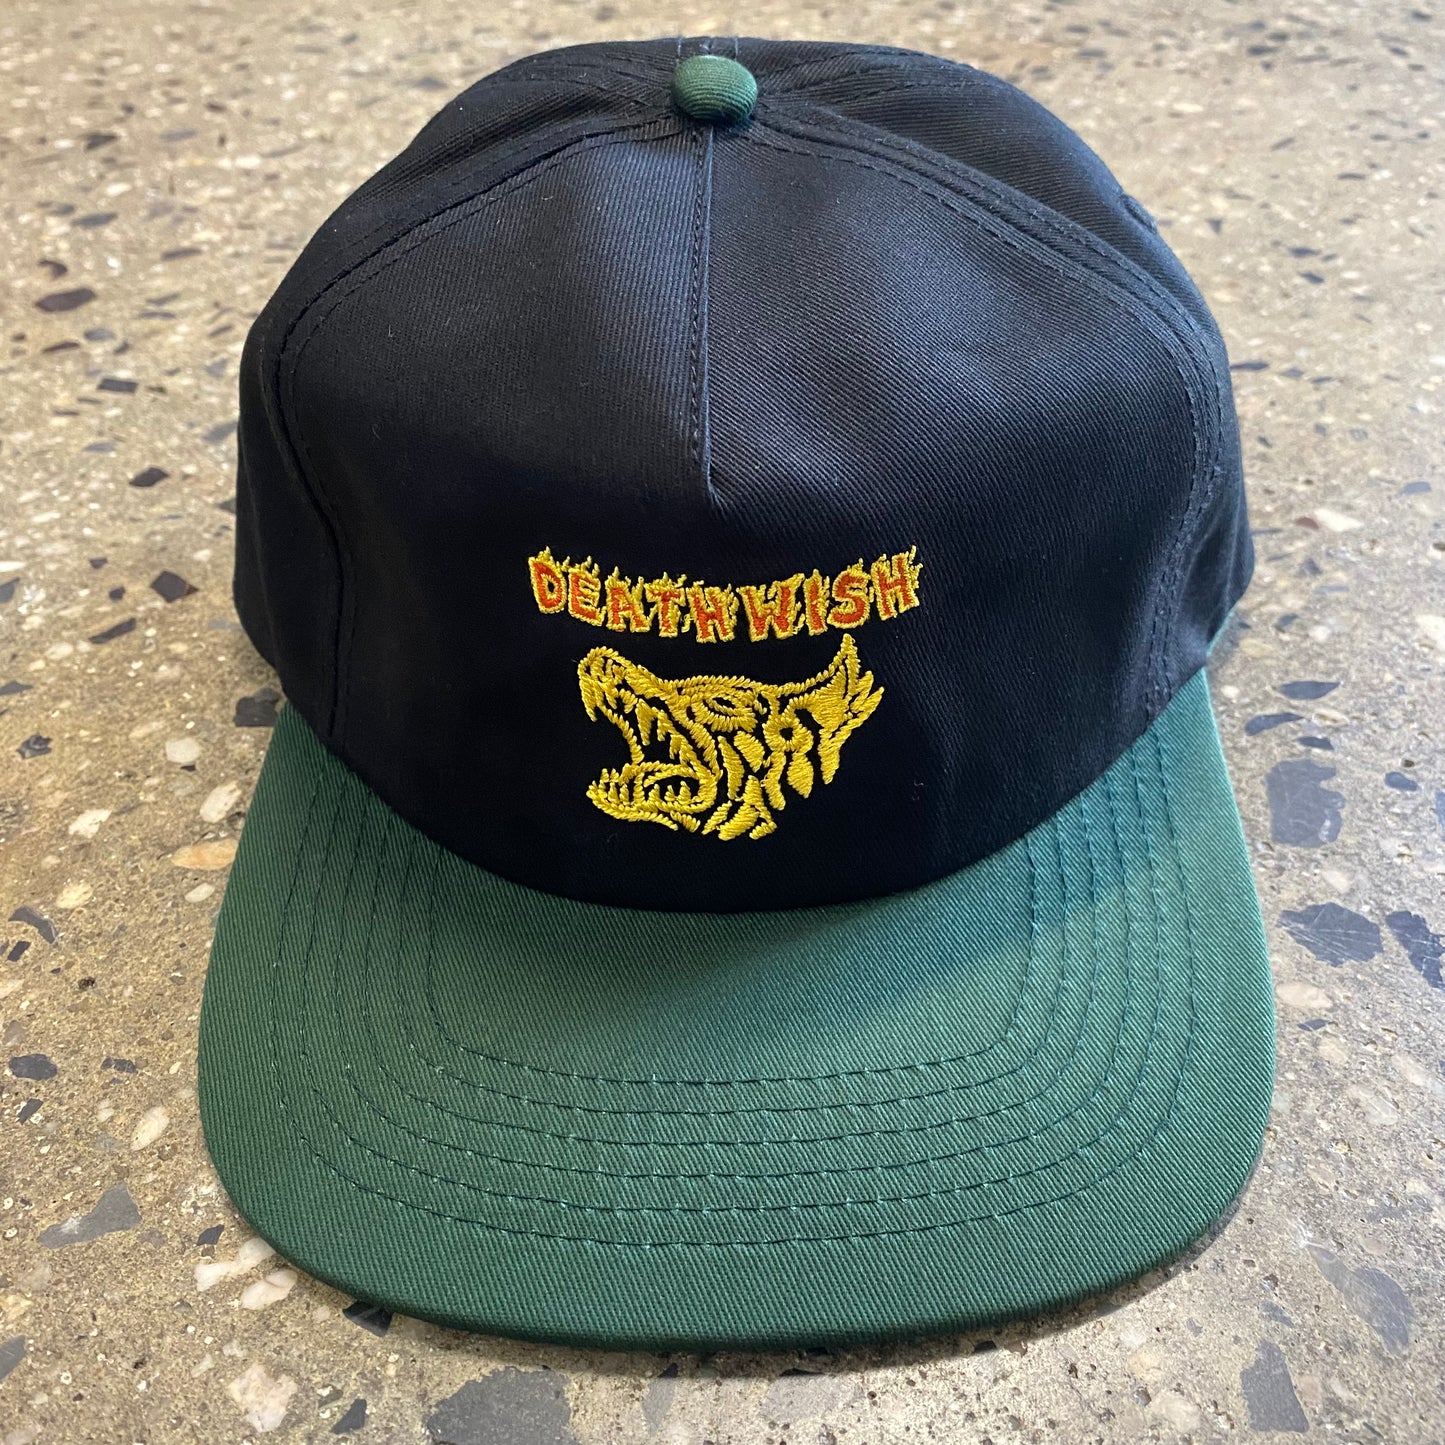 Deathwish Man's Best Friend Snapback Hat - Black